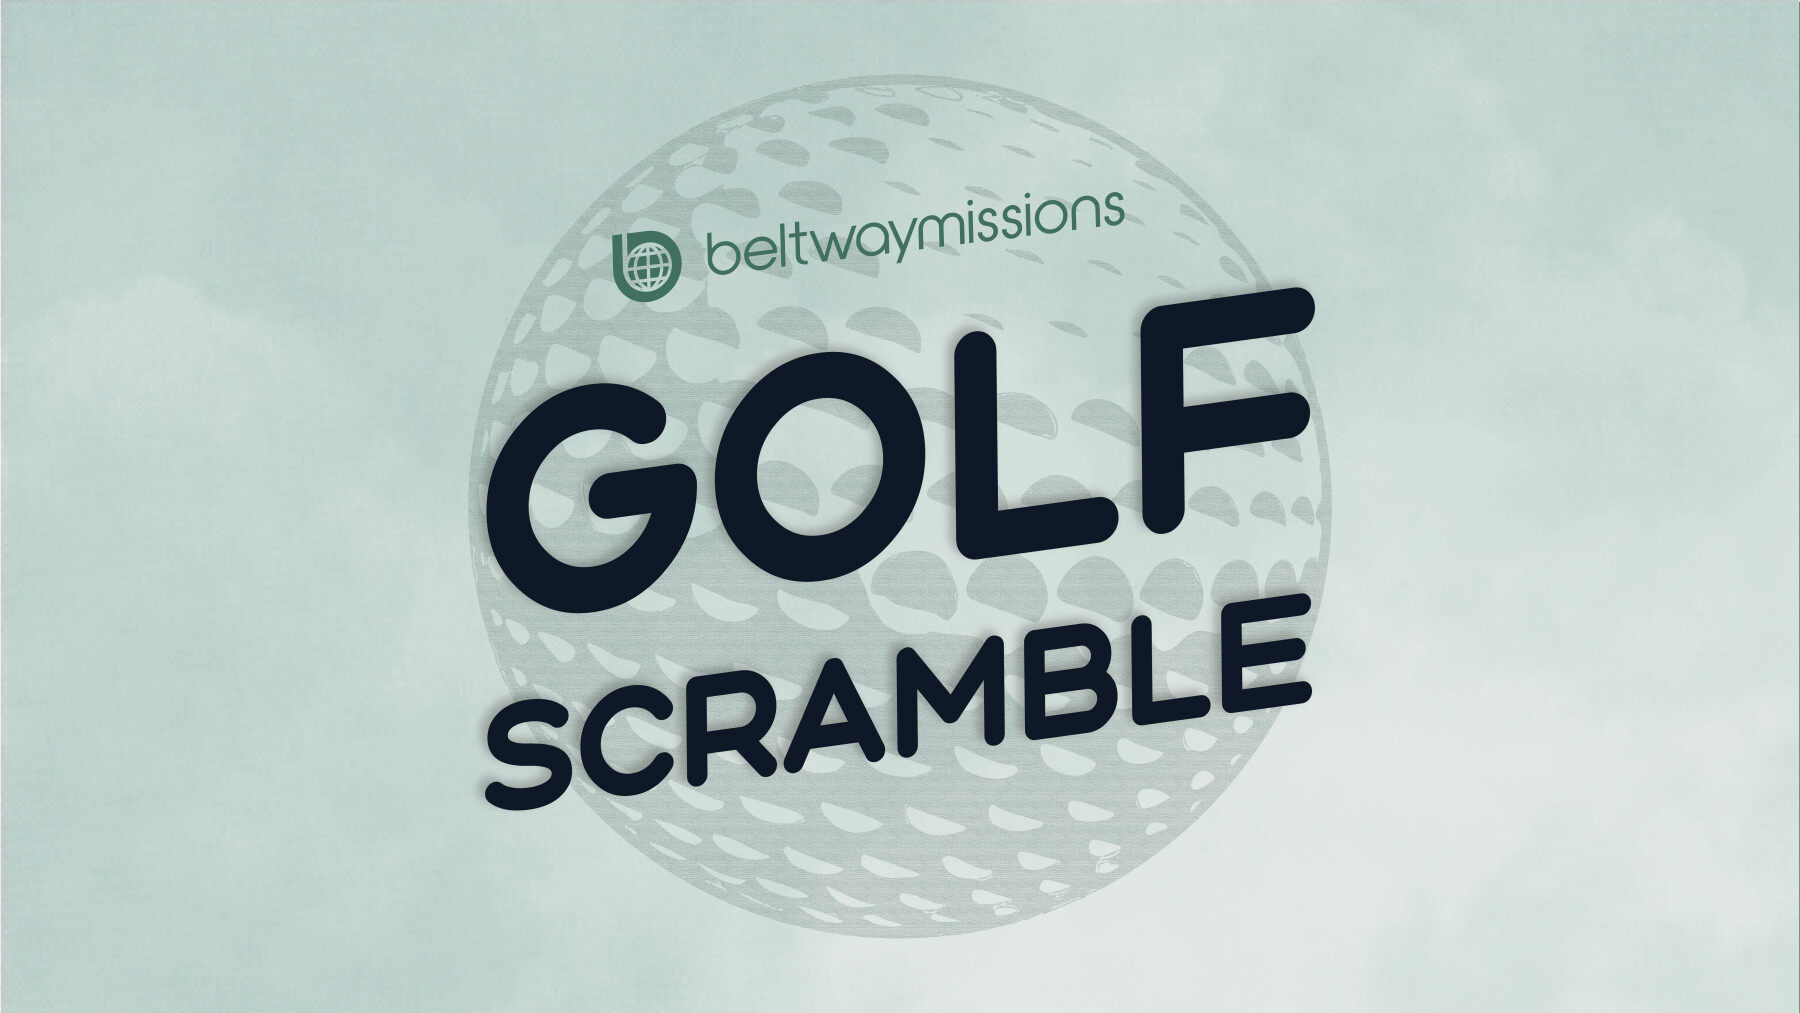 Annual Missions Golf Scramble